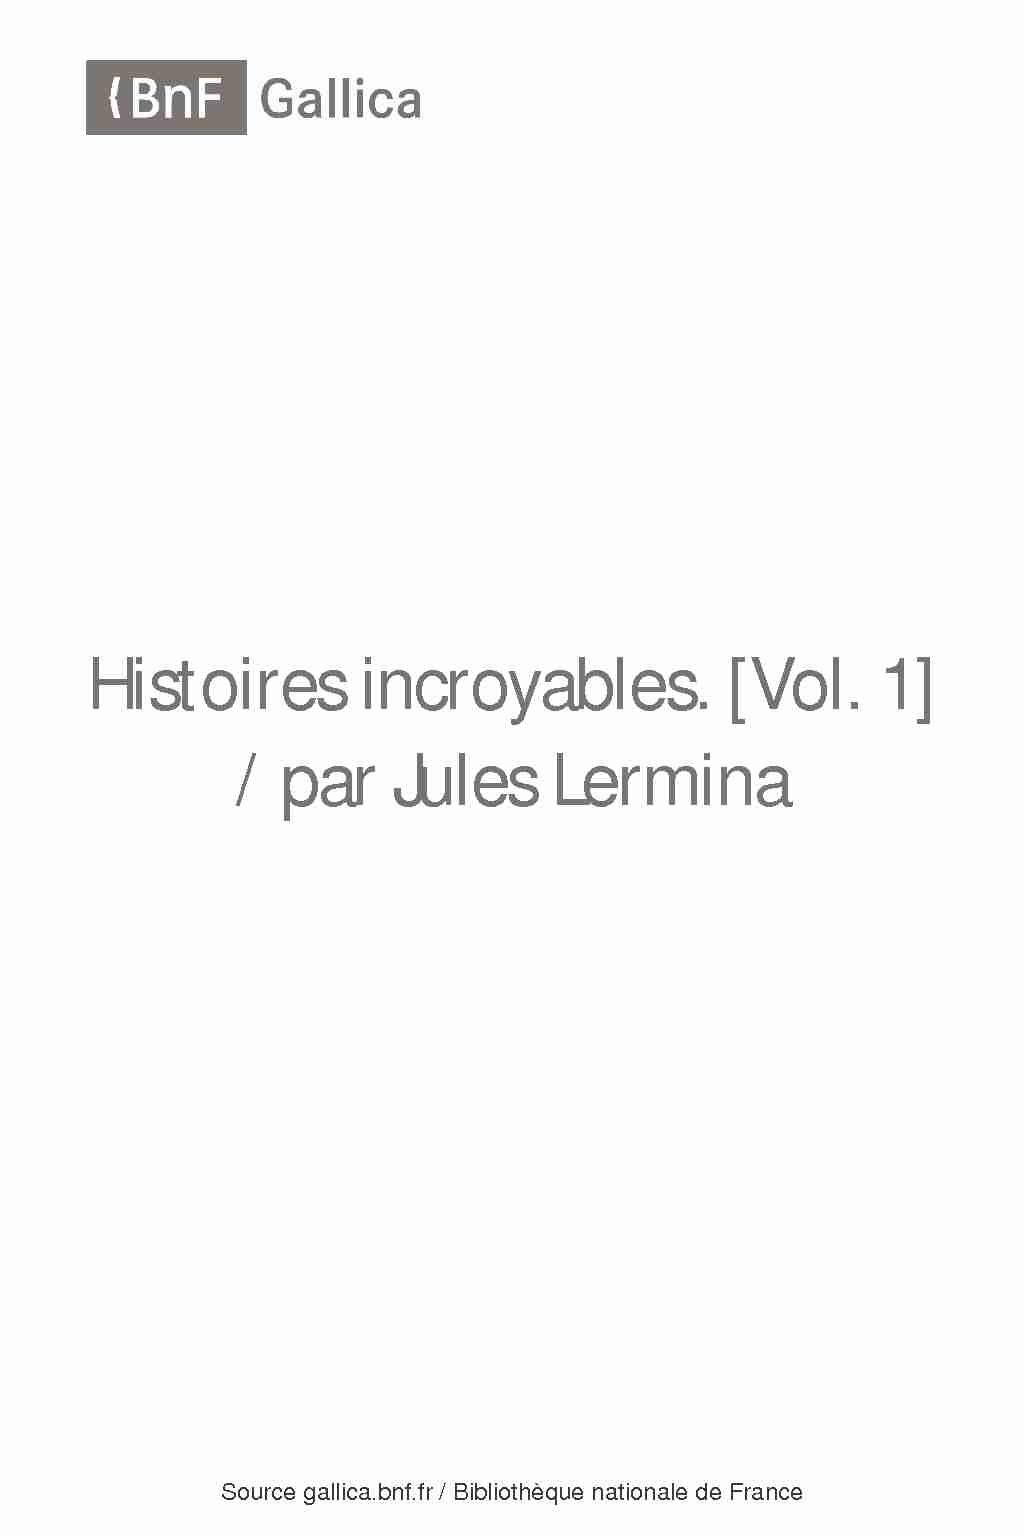 [PDF] Histoires incroyables / par Jules Lermina - Gallica - BnF